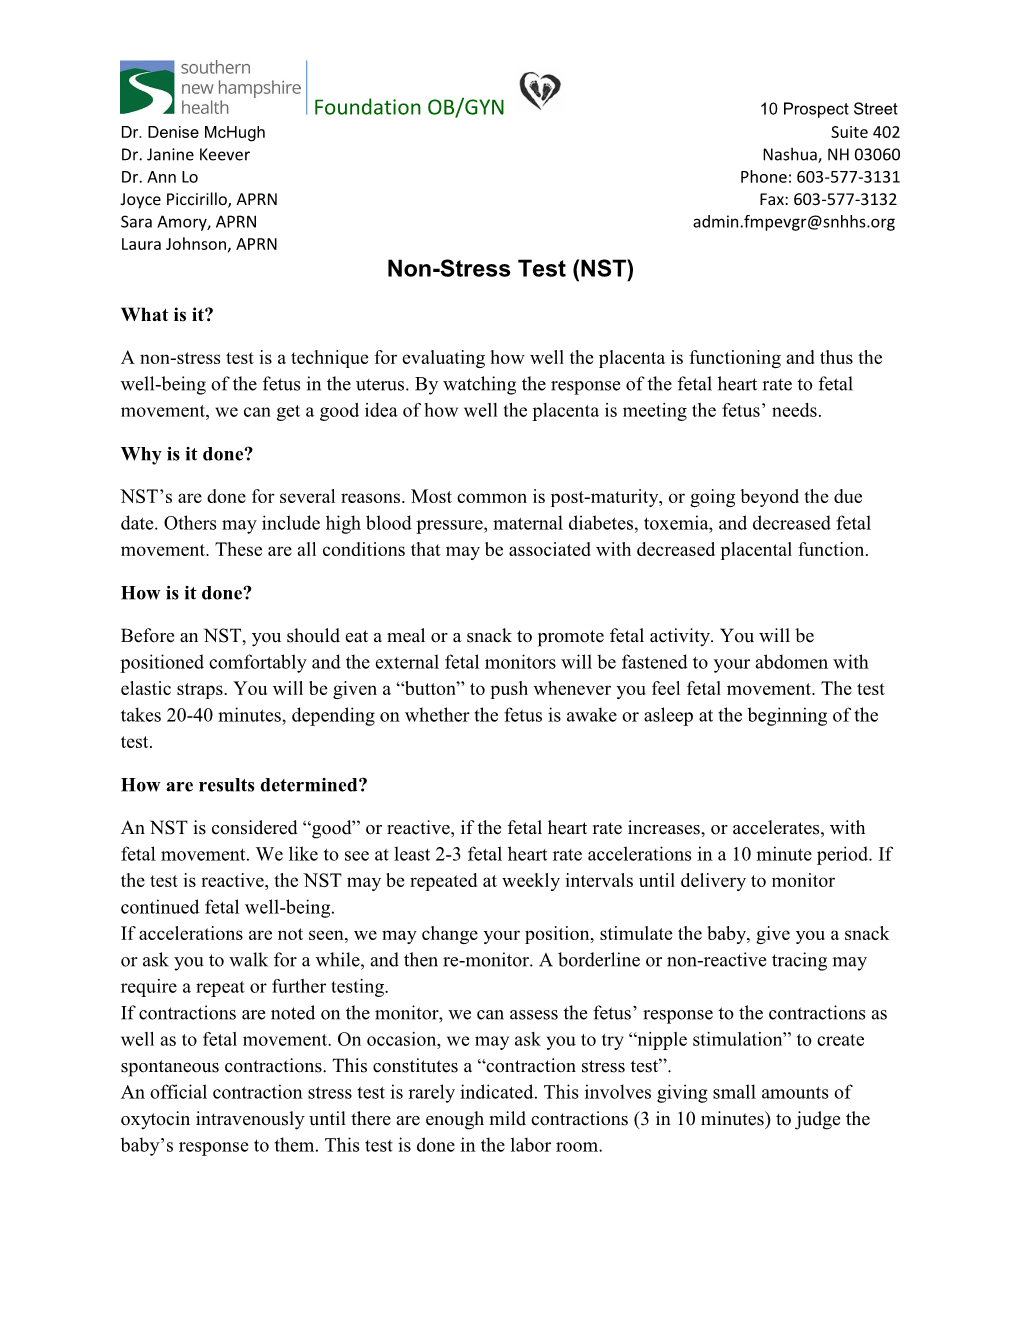 Foundation OB/GYN Non-Stress Test (NST)